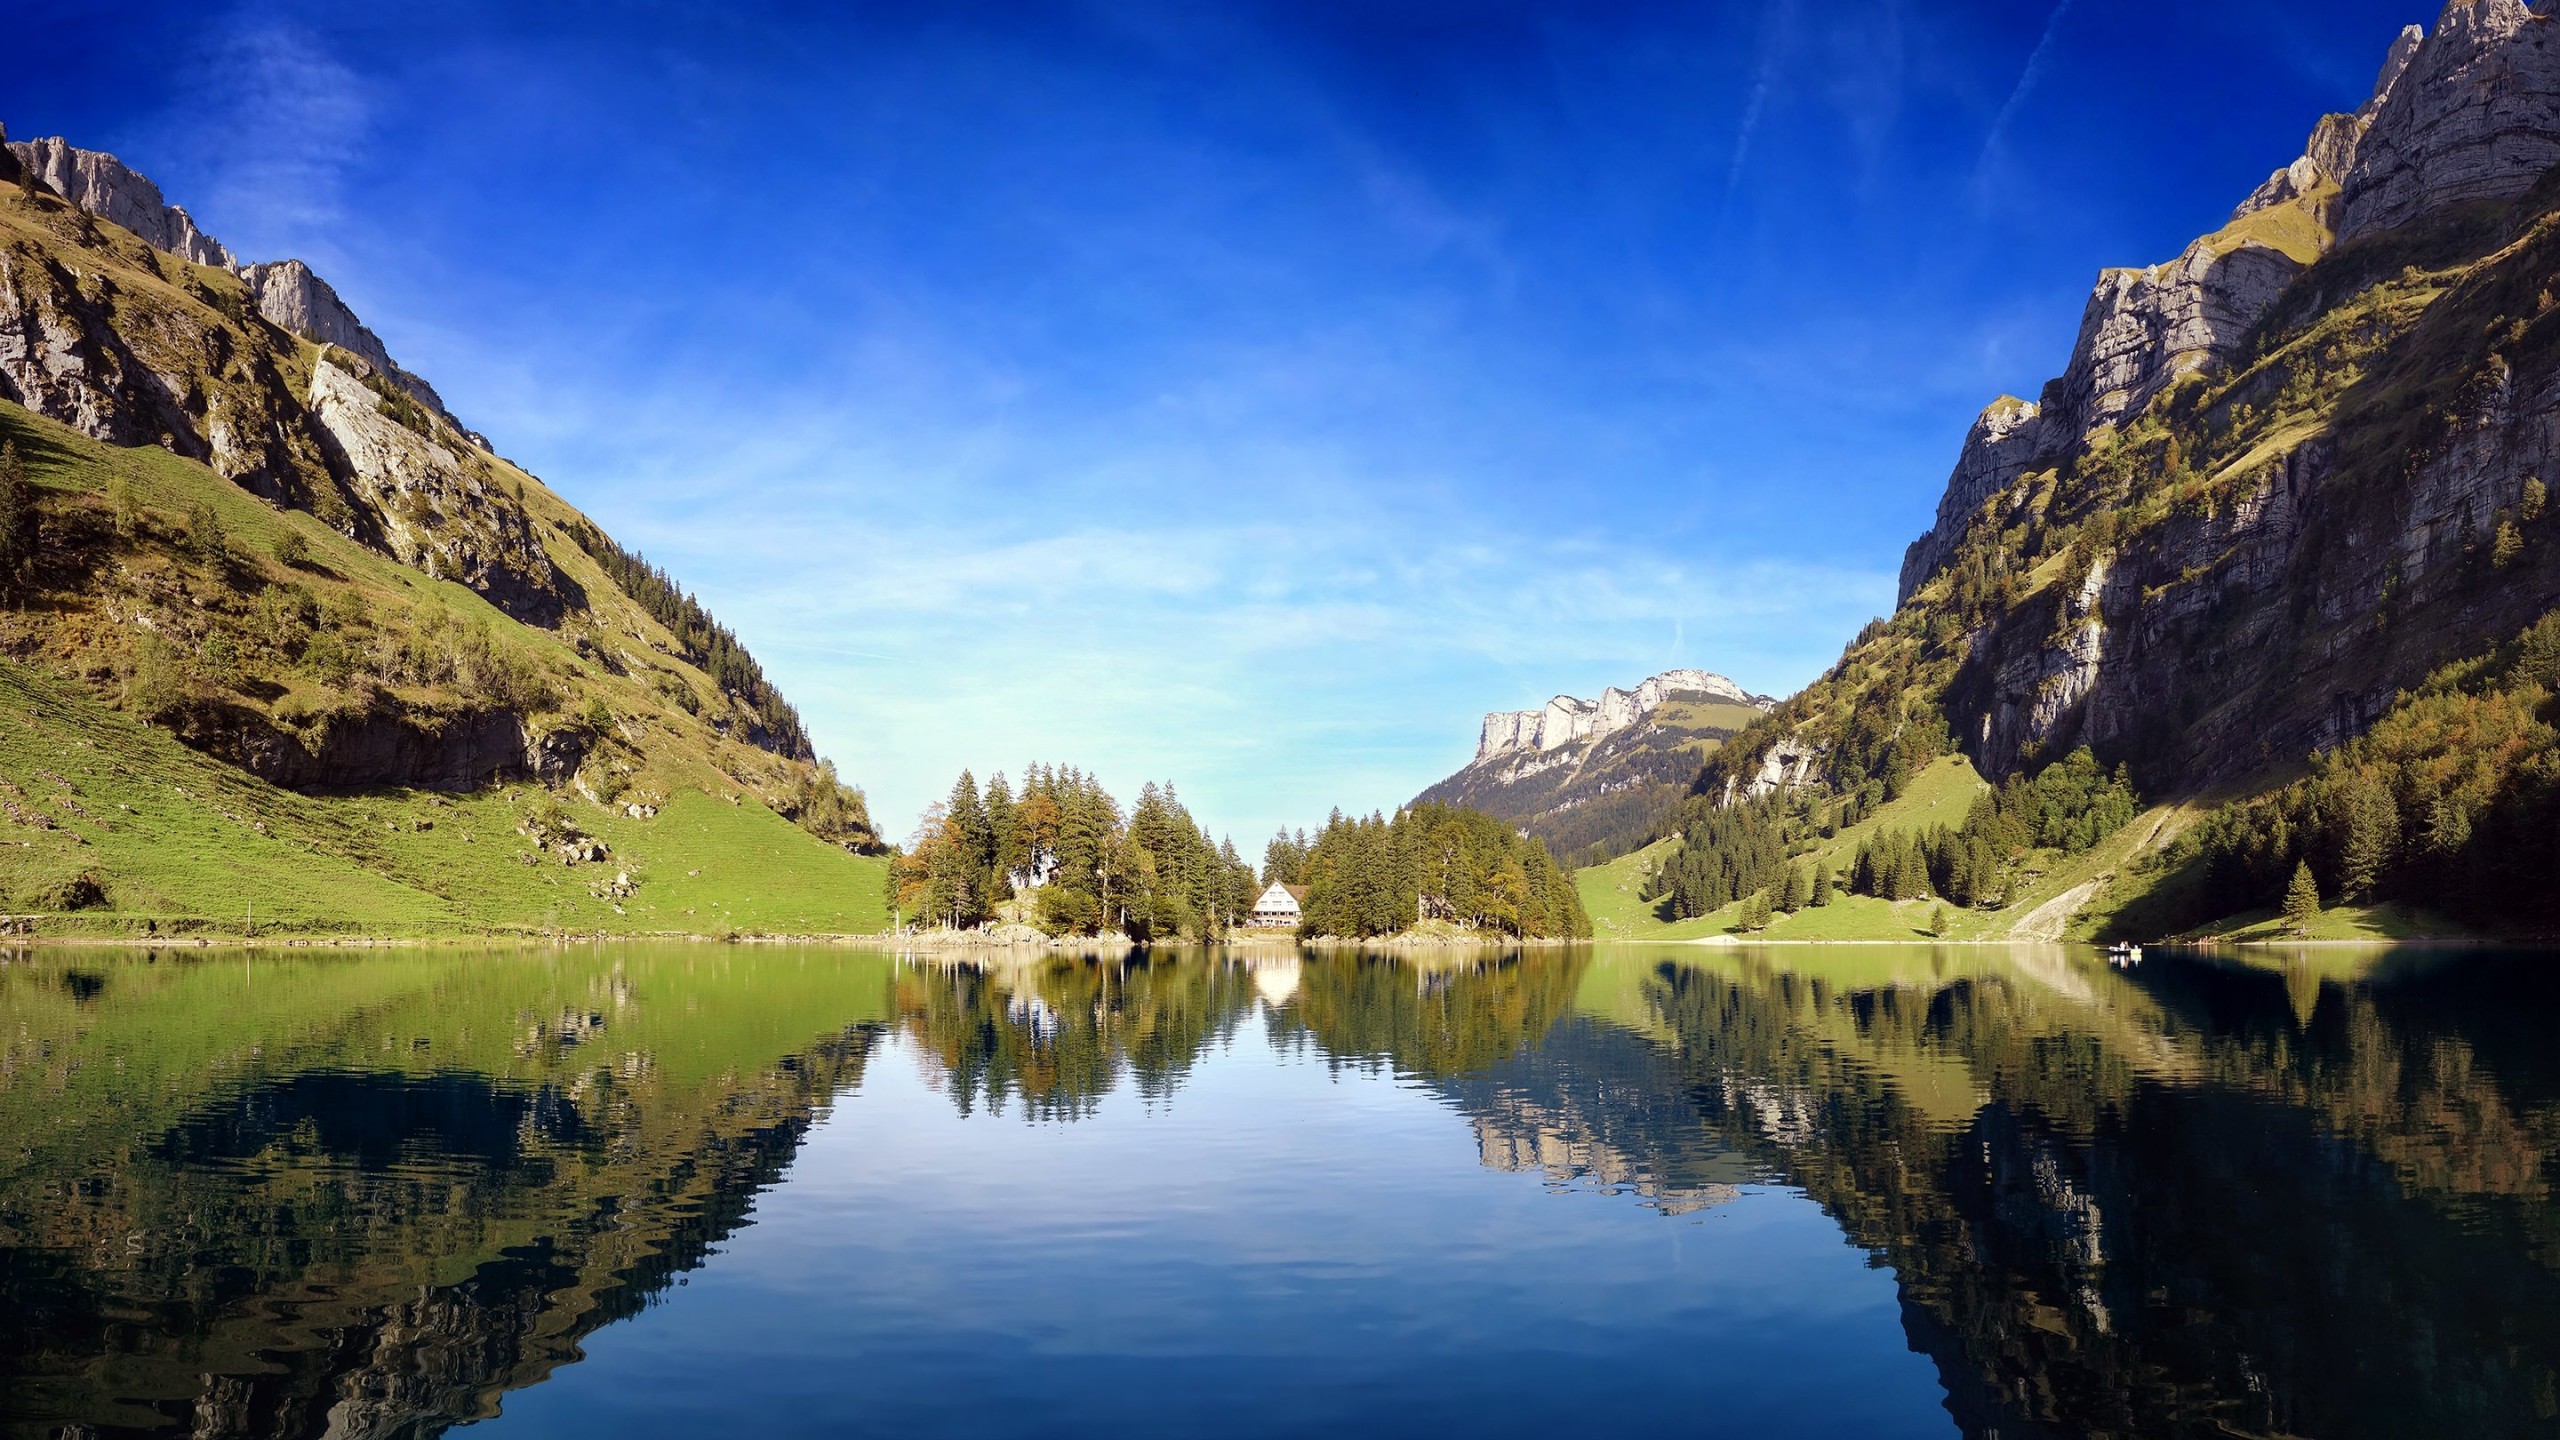 Seealpsee lake in Switzerland Wallpaper for Desktop 2560x1440